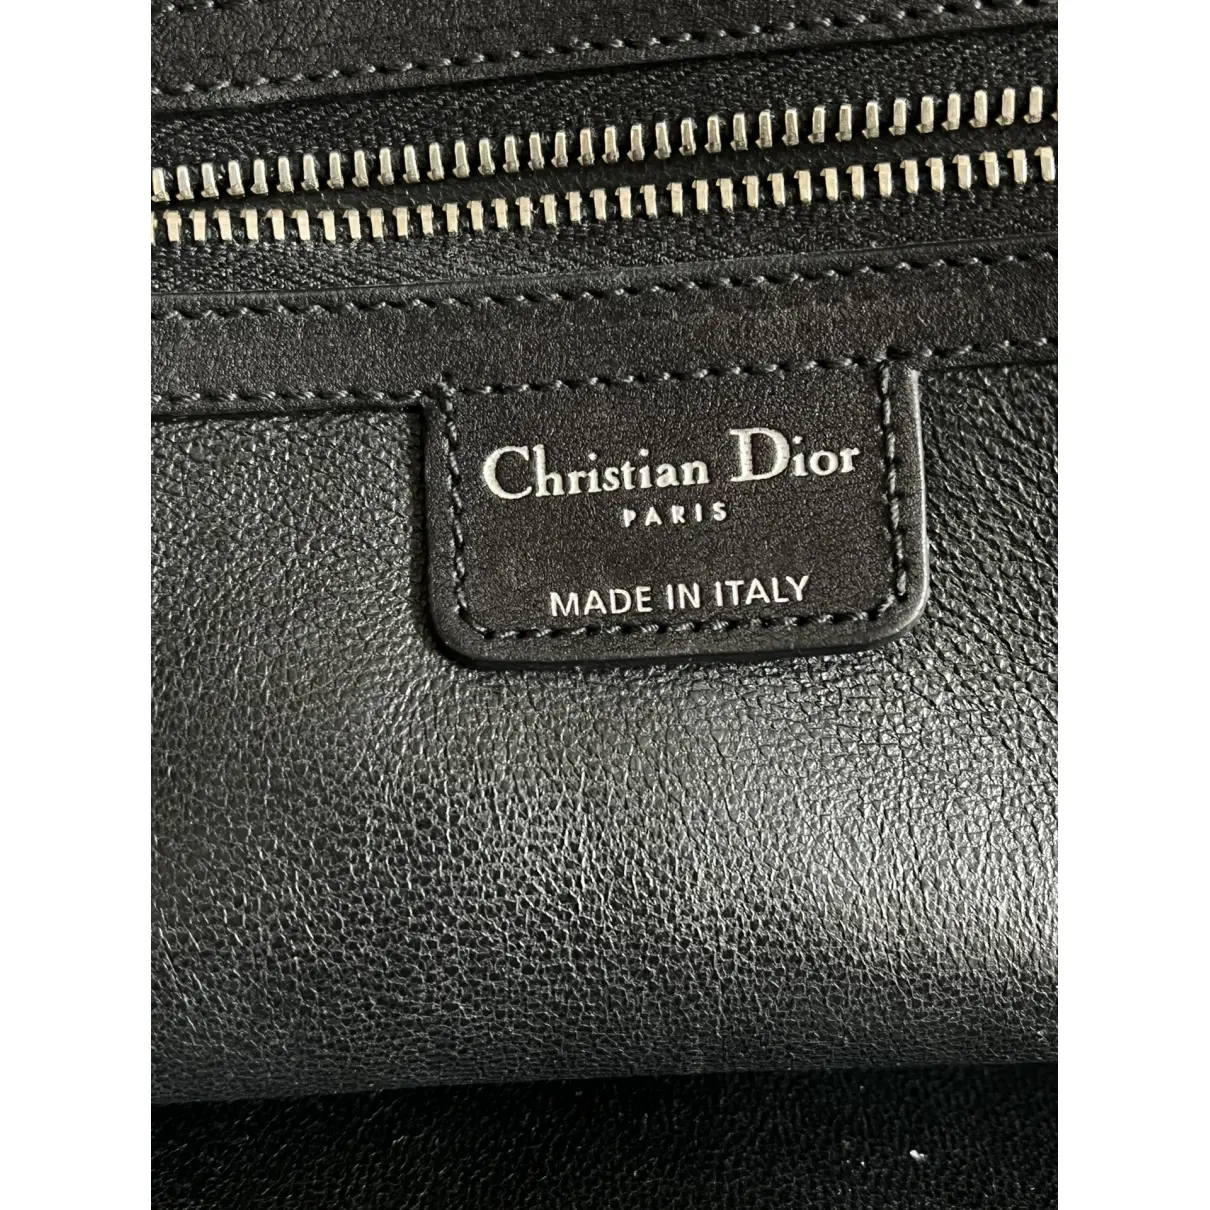 Détective leather handbag Dior